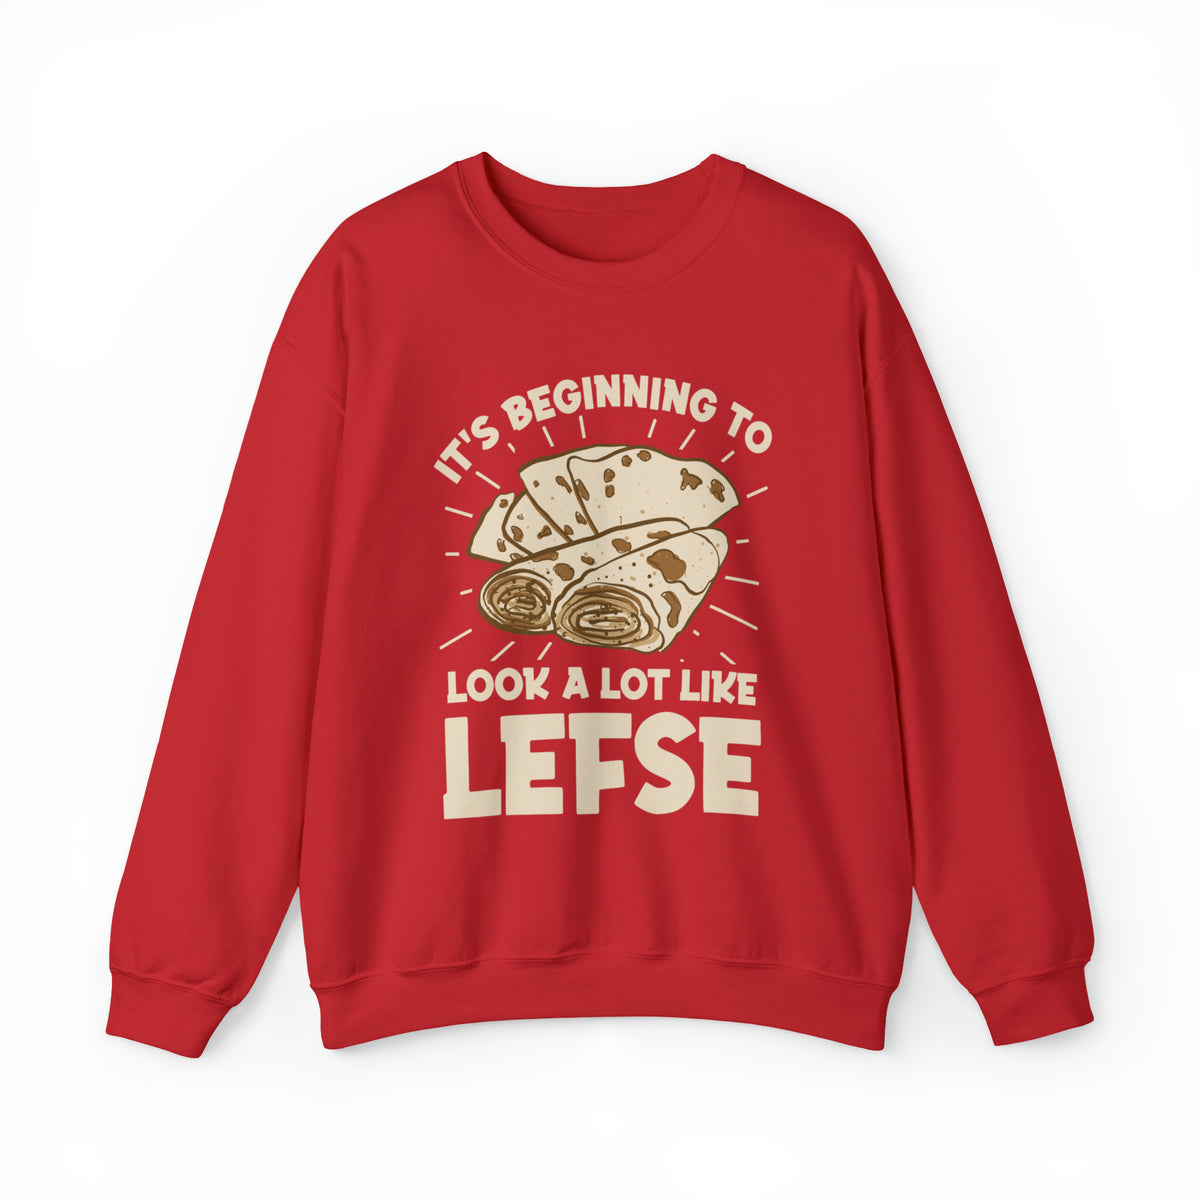 Norwegian Lefse Funny Holiday Baking Shirt | Baker Gift | Unisex Crewneck Sweatshirt